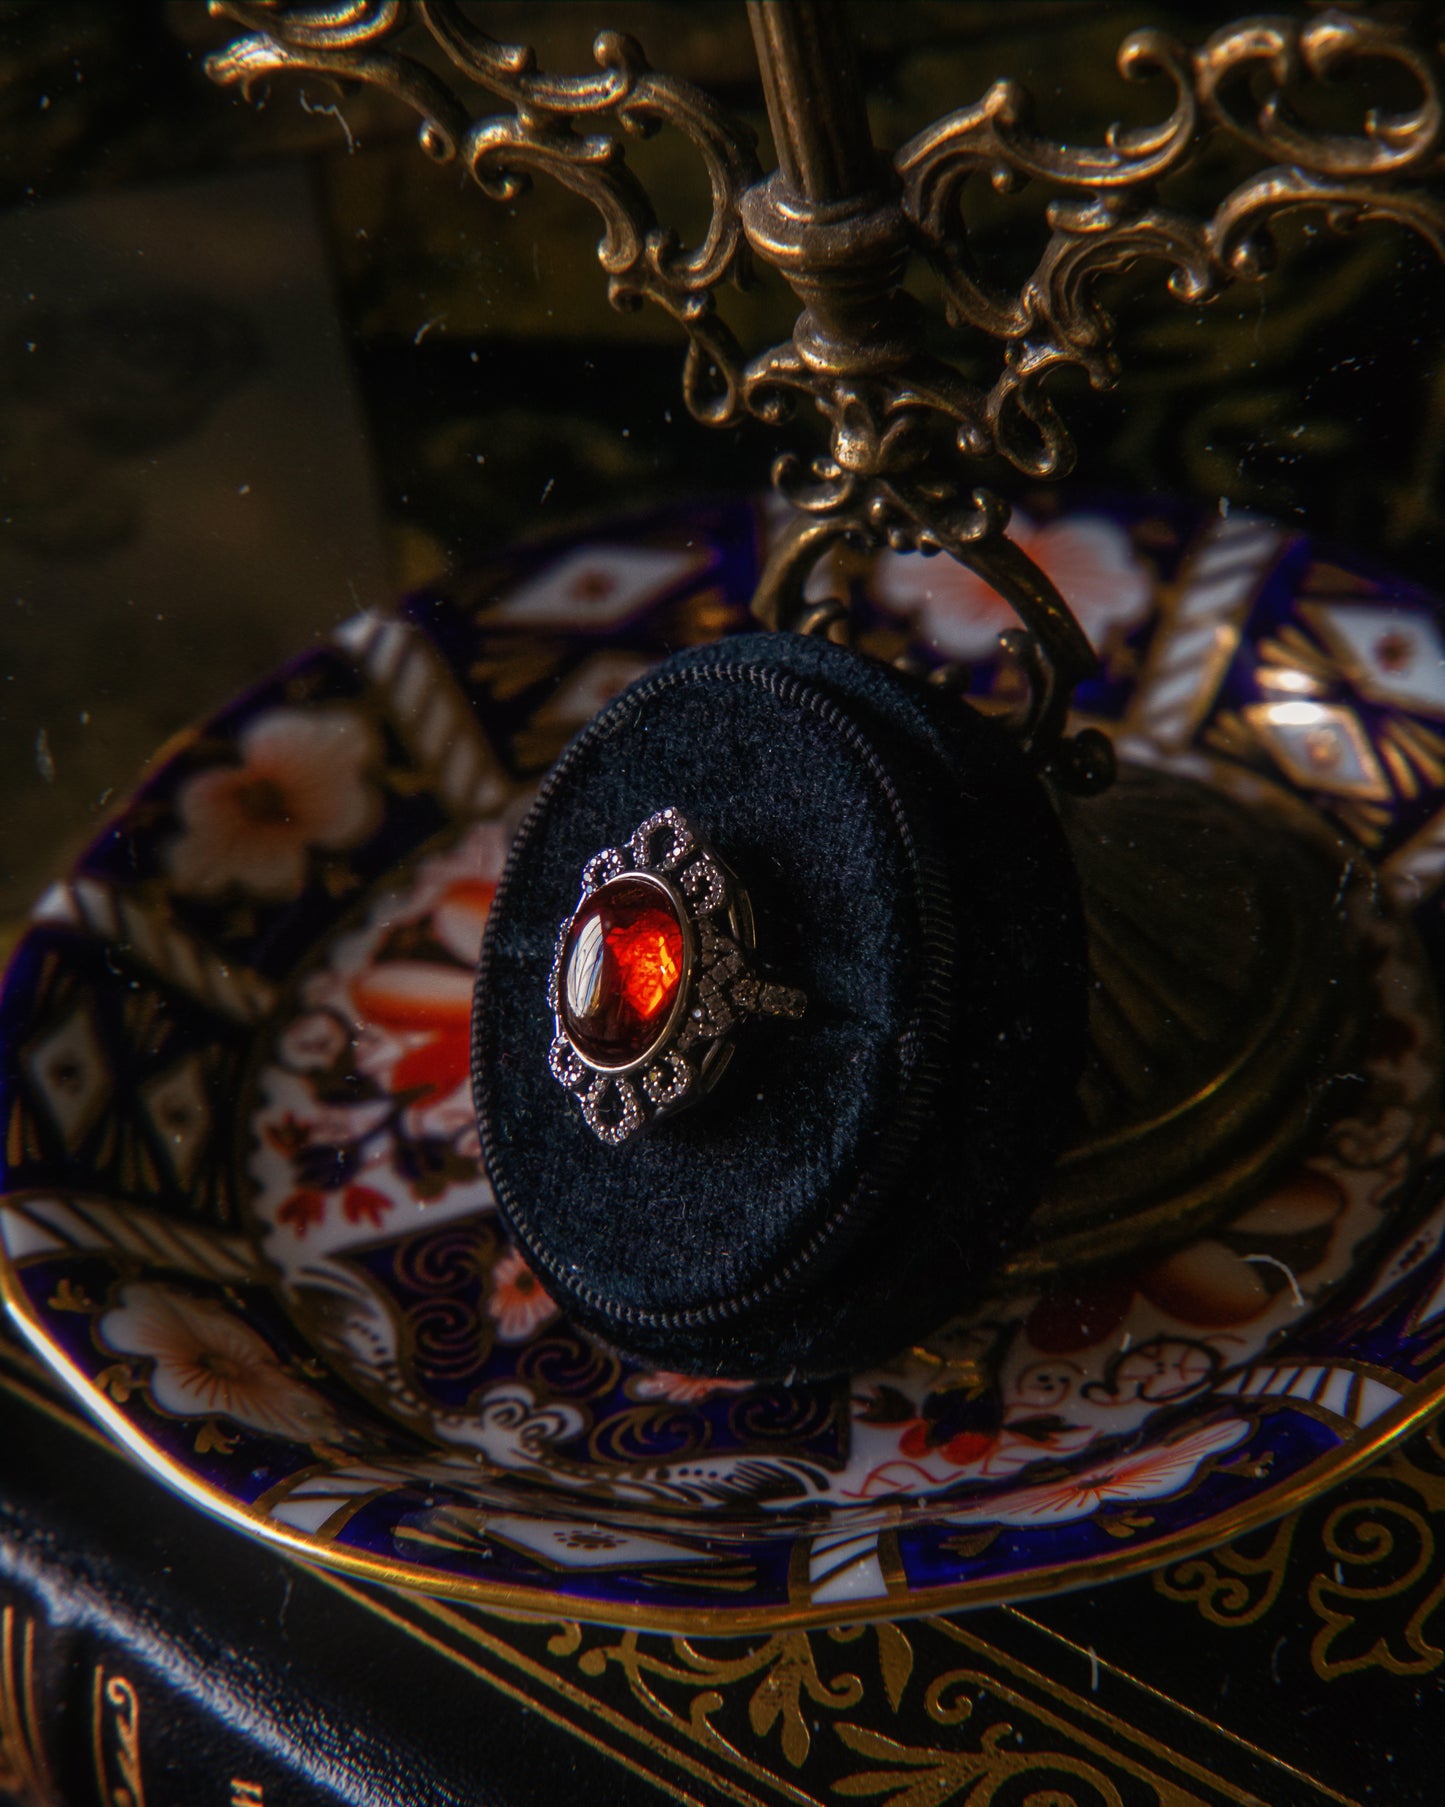 The "Crimson Ghost” Heirloom Ring